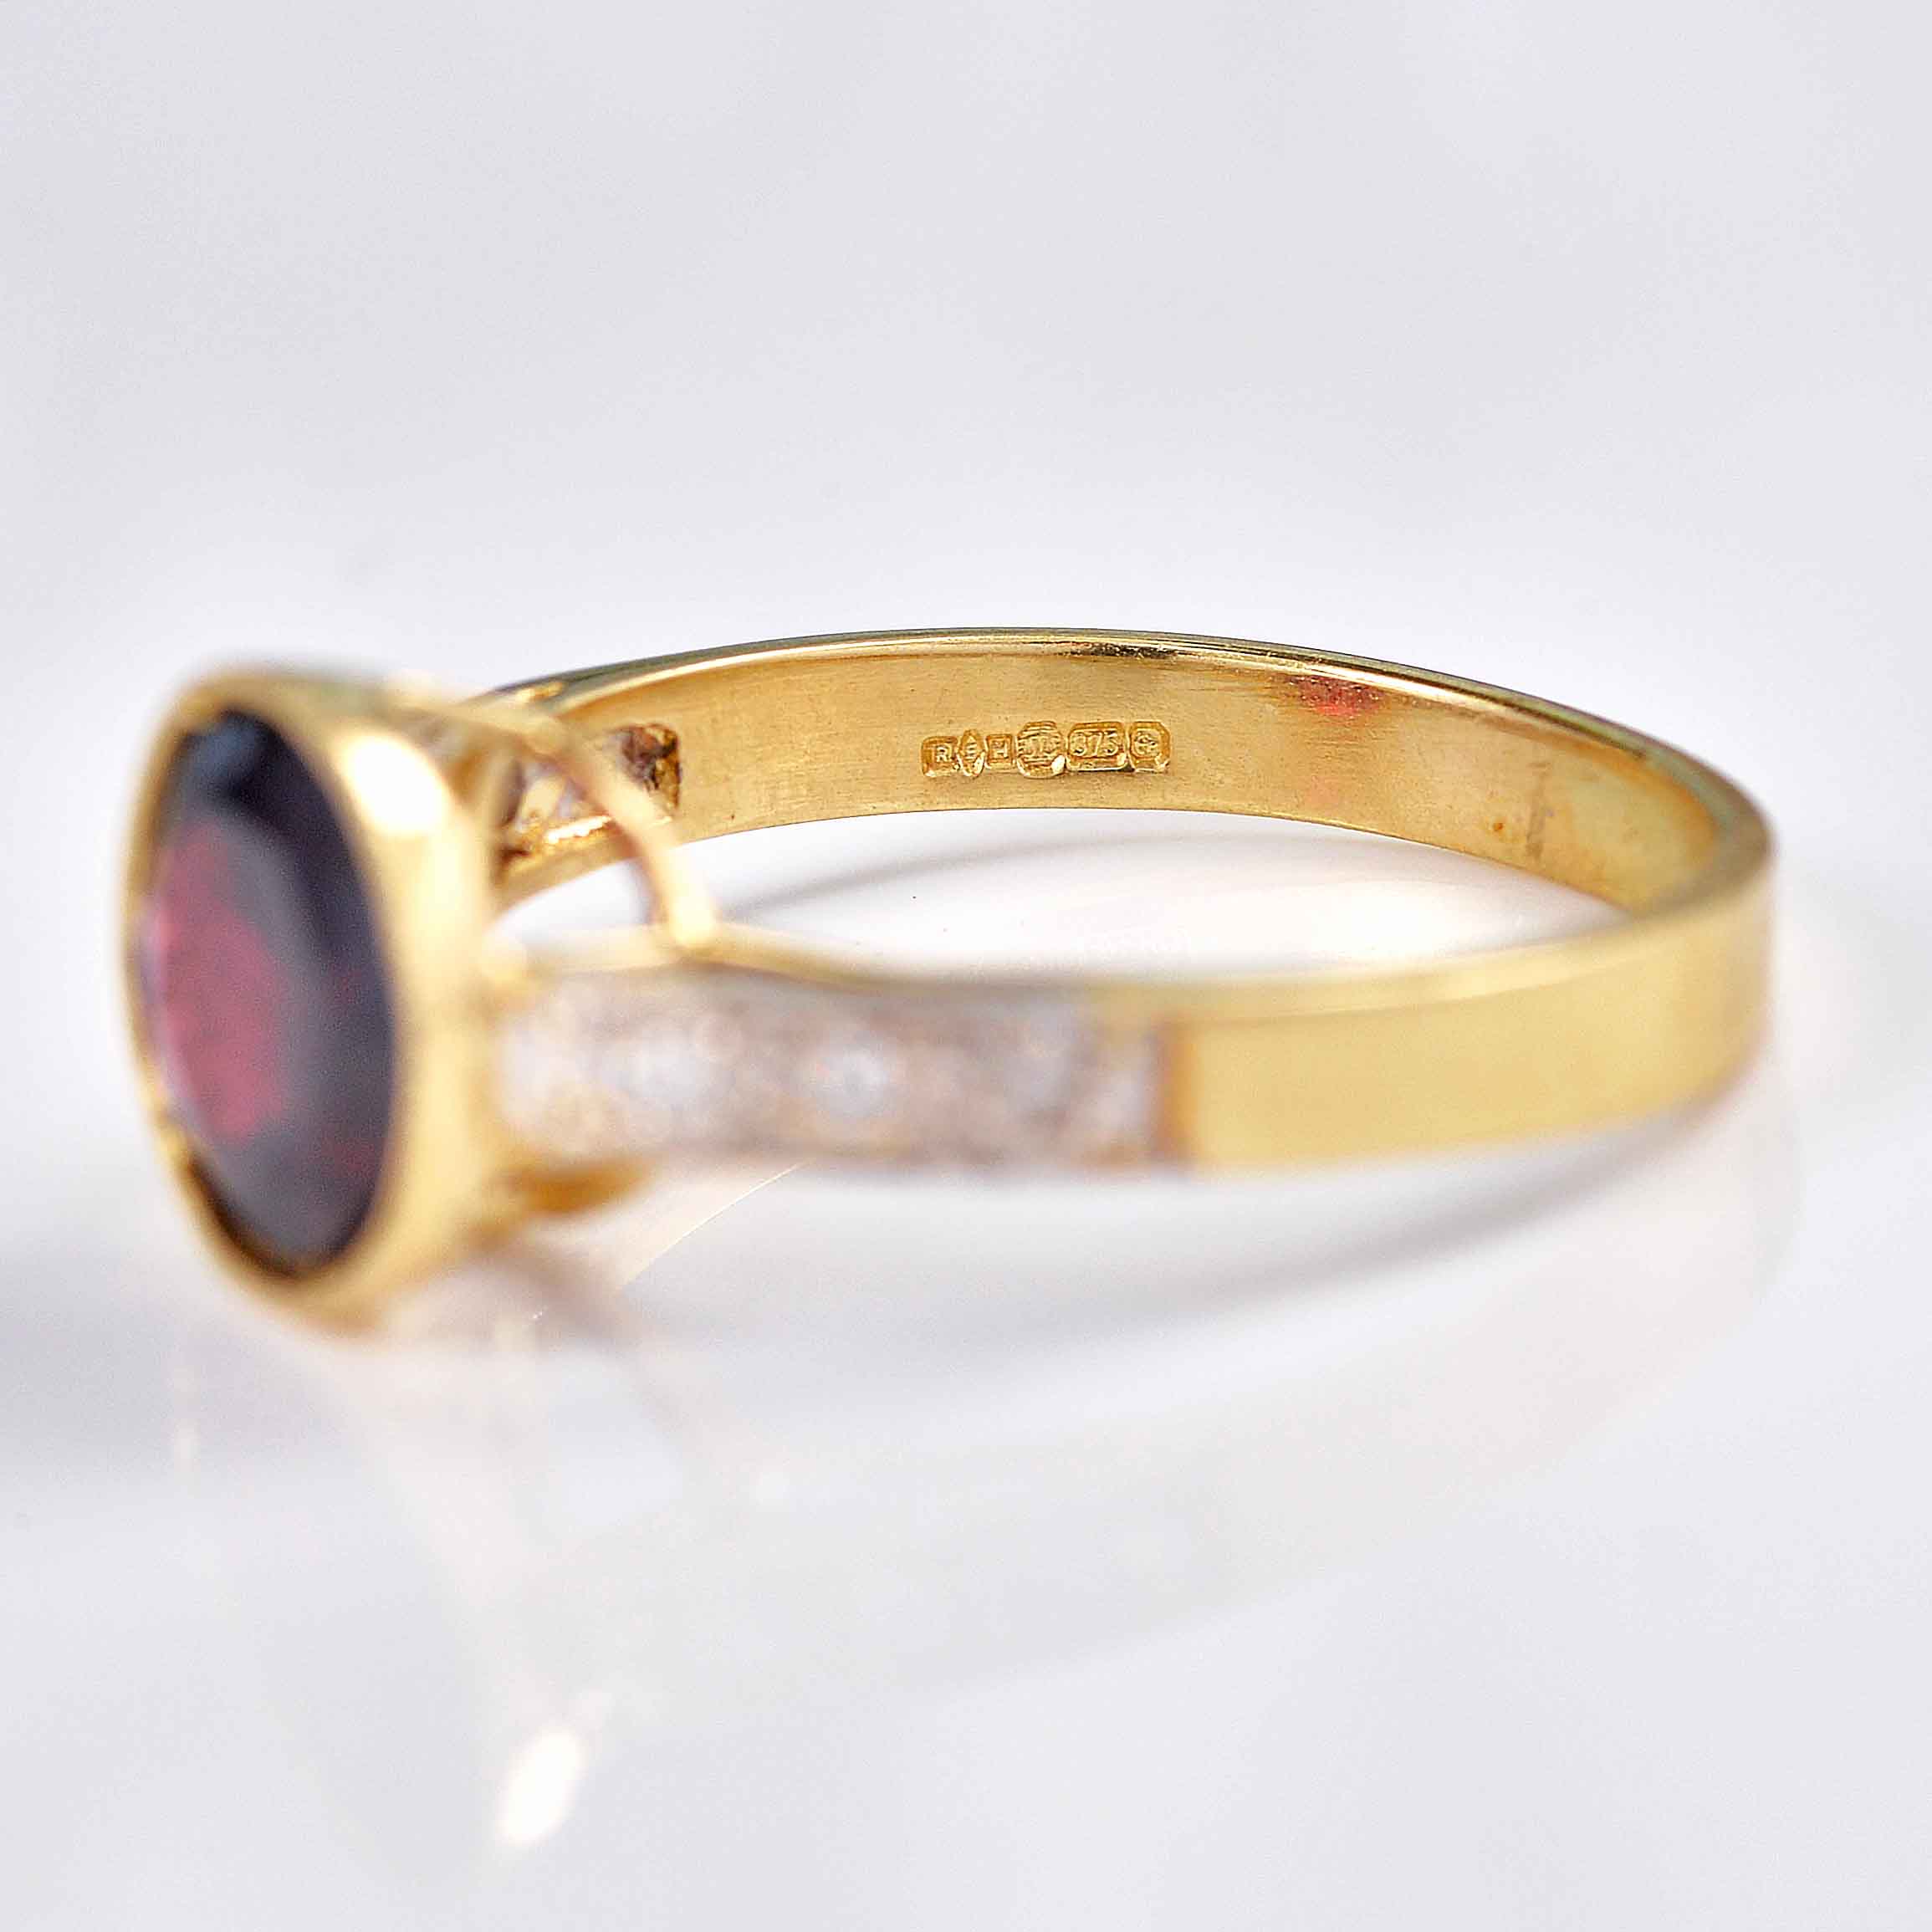 Ellibelle Jewellery Art Deco Style Garnet & Diamond 9ct Gold Bezel Ring